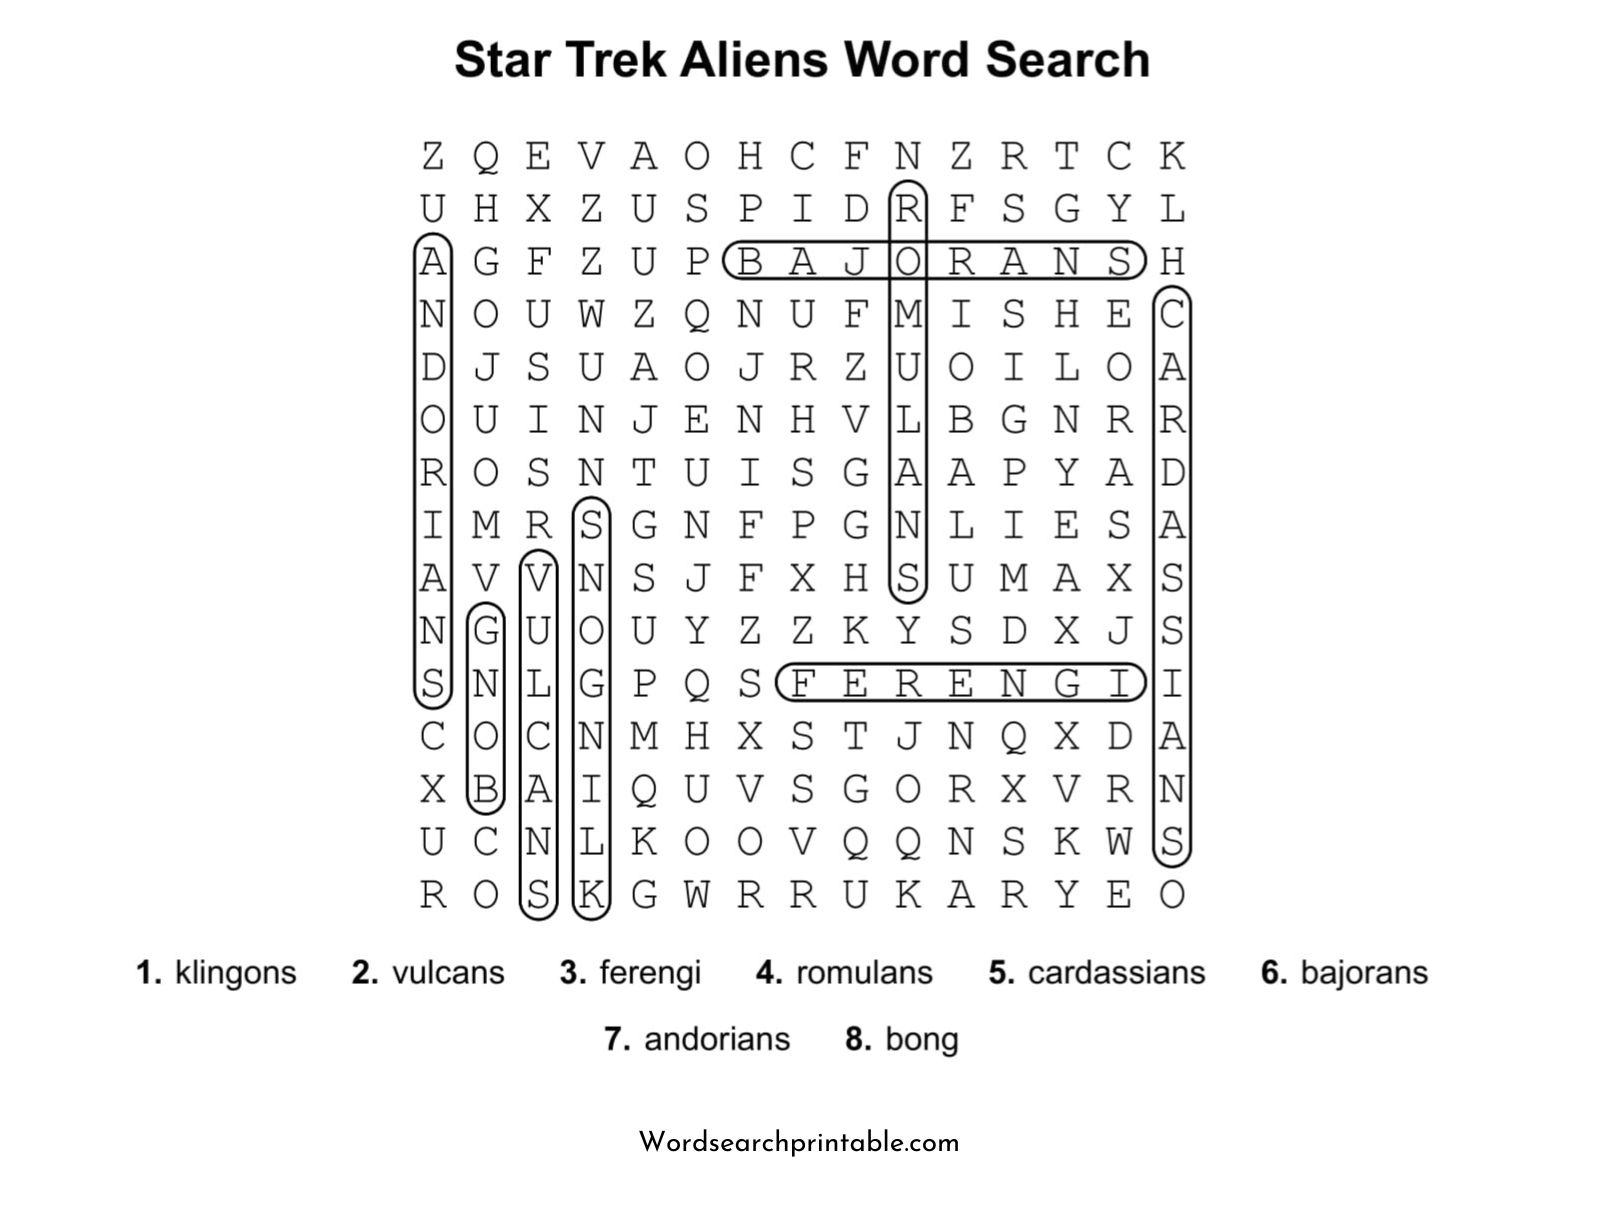 star trek aliens word search puzzle solution